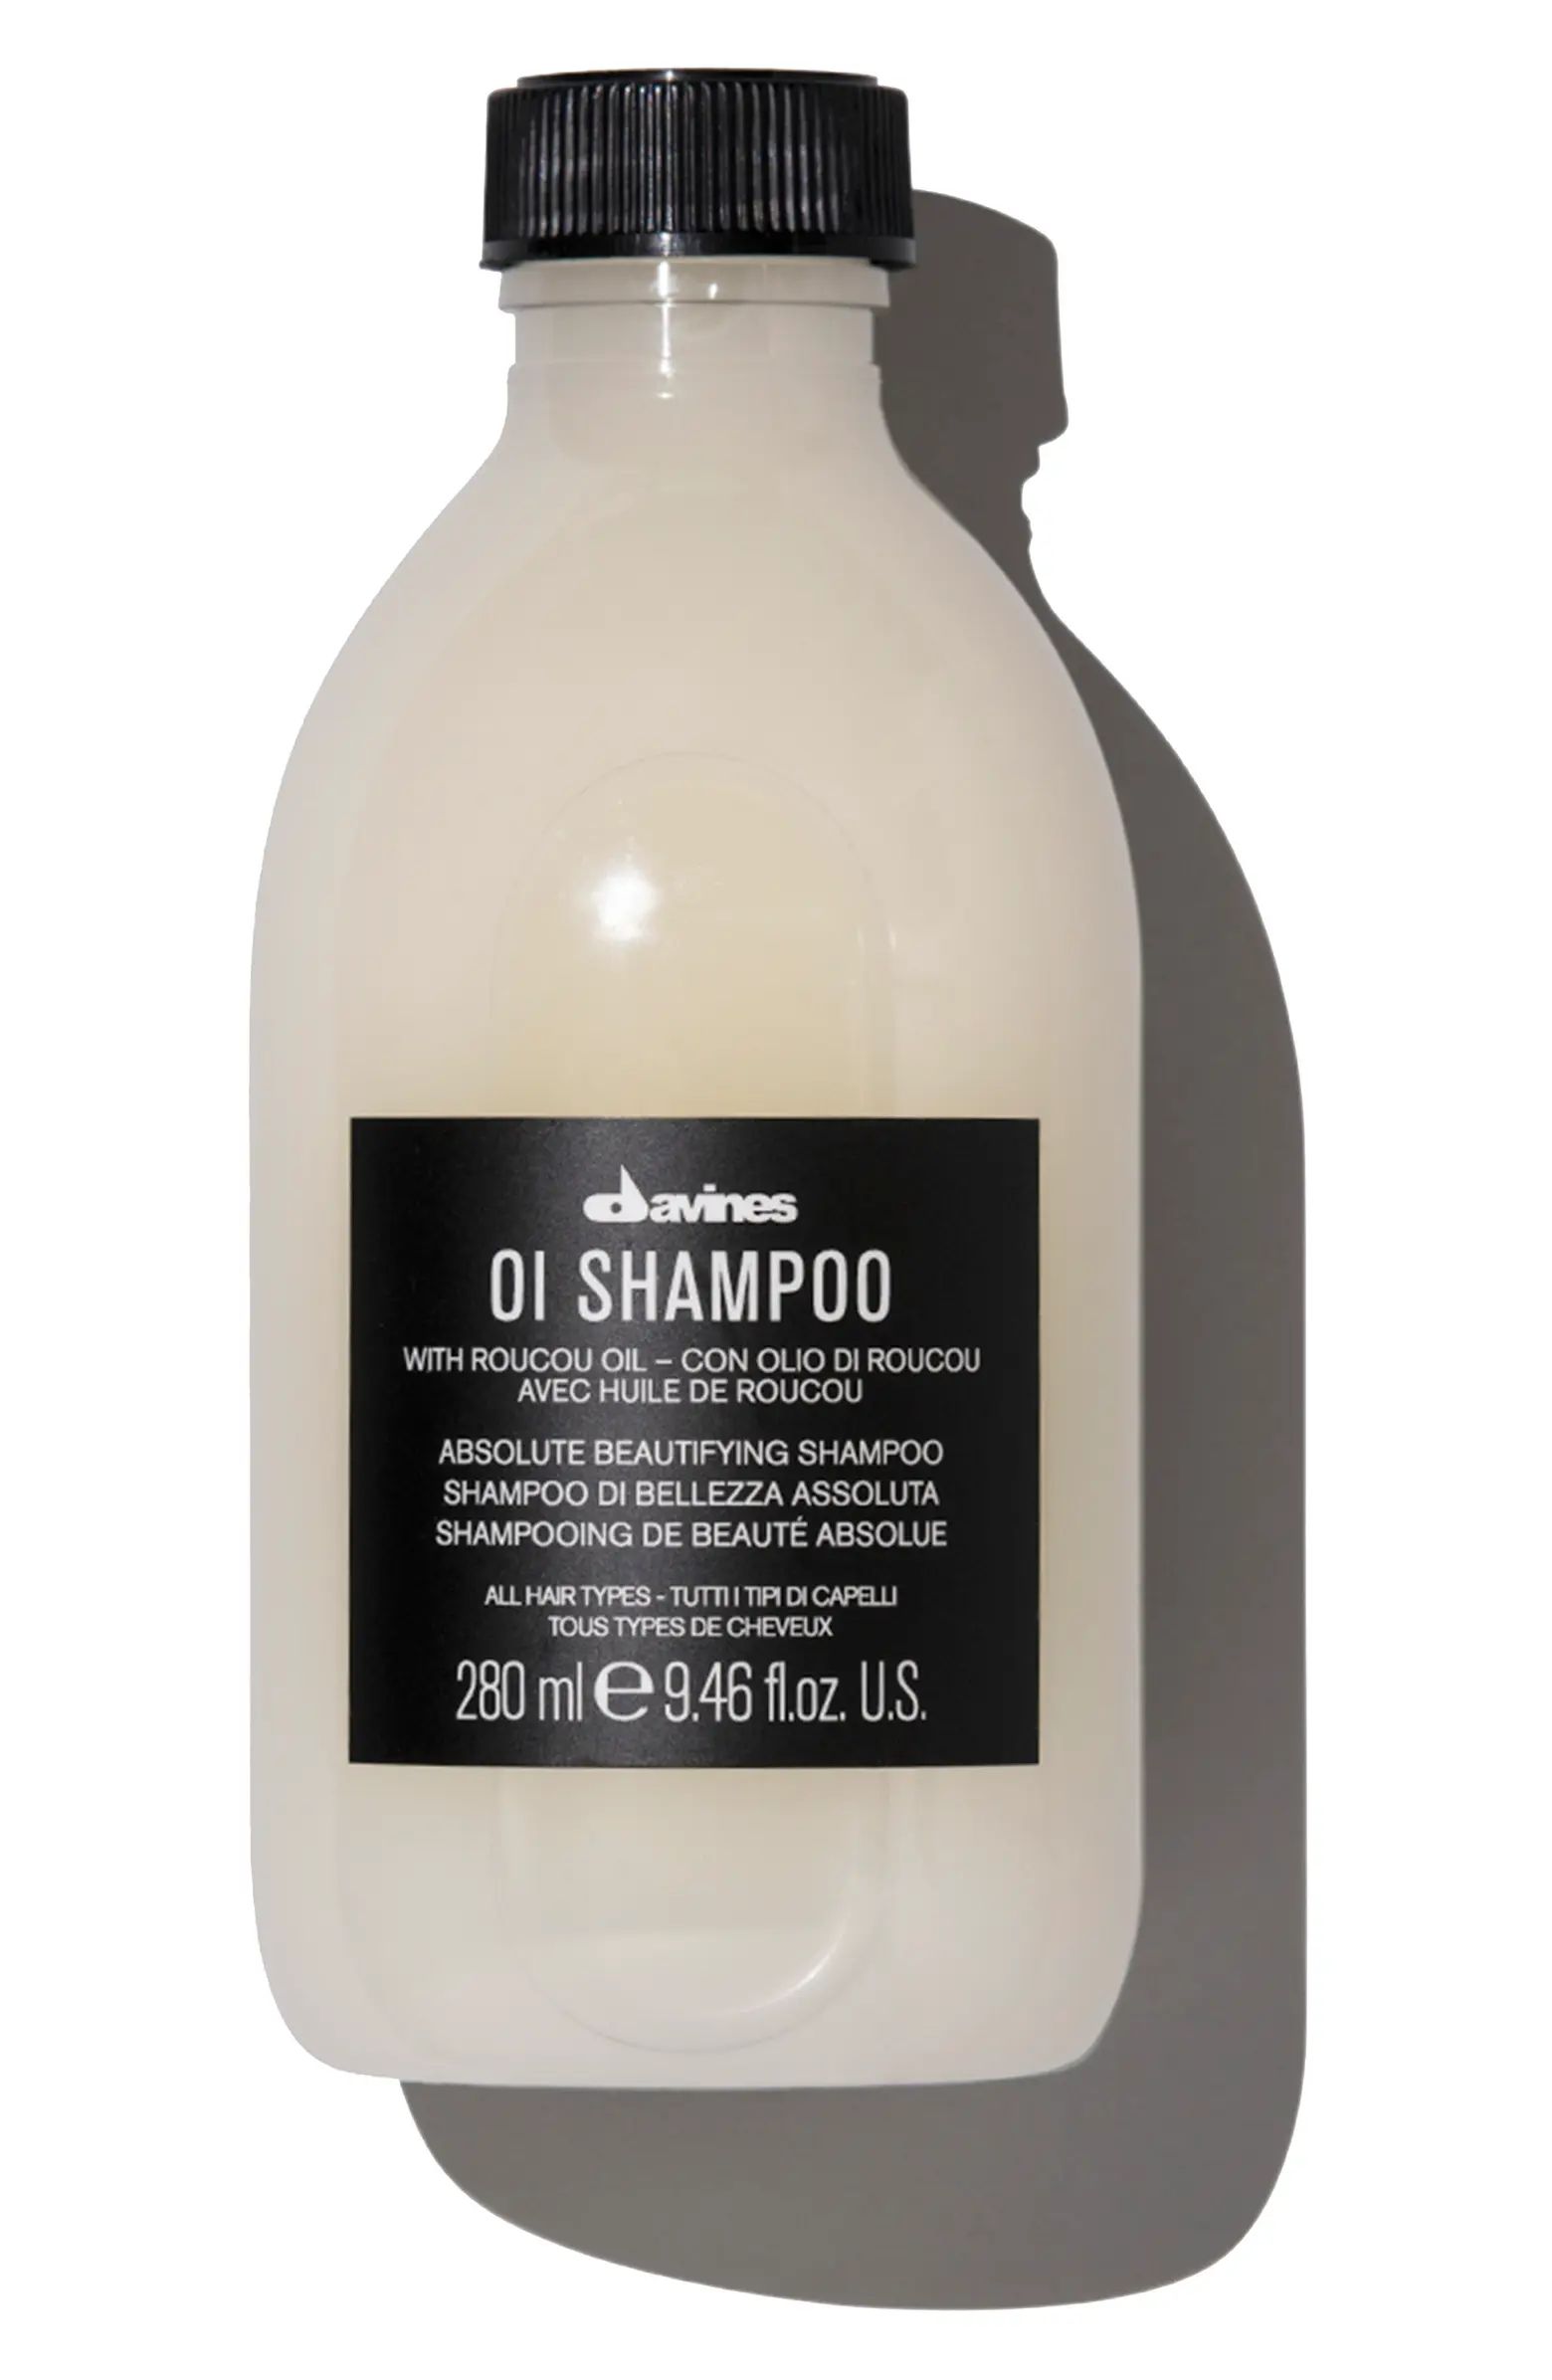 OI Shampoo | Nordstrom